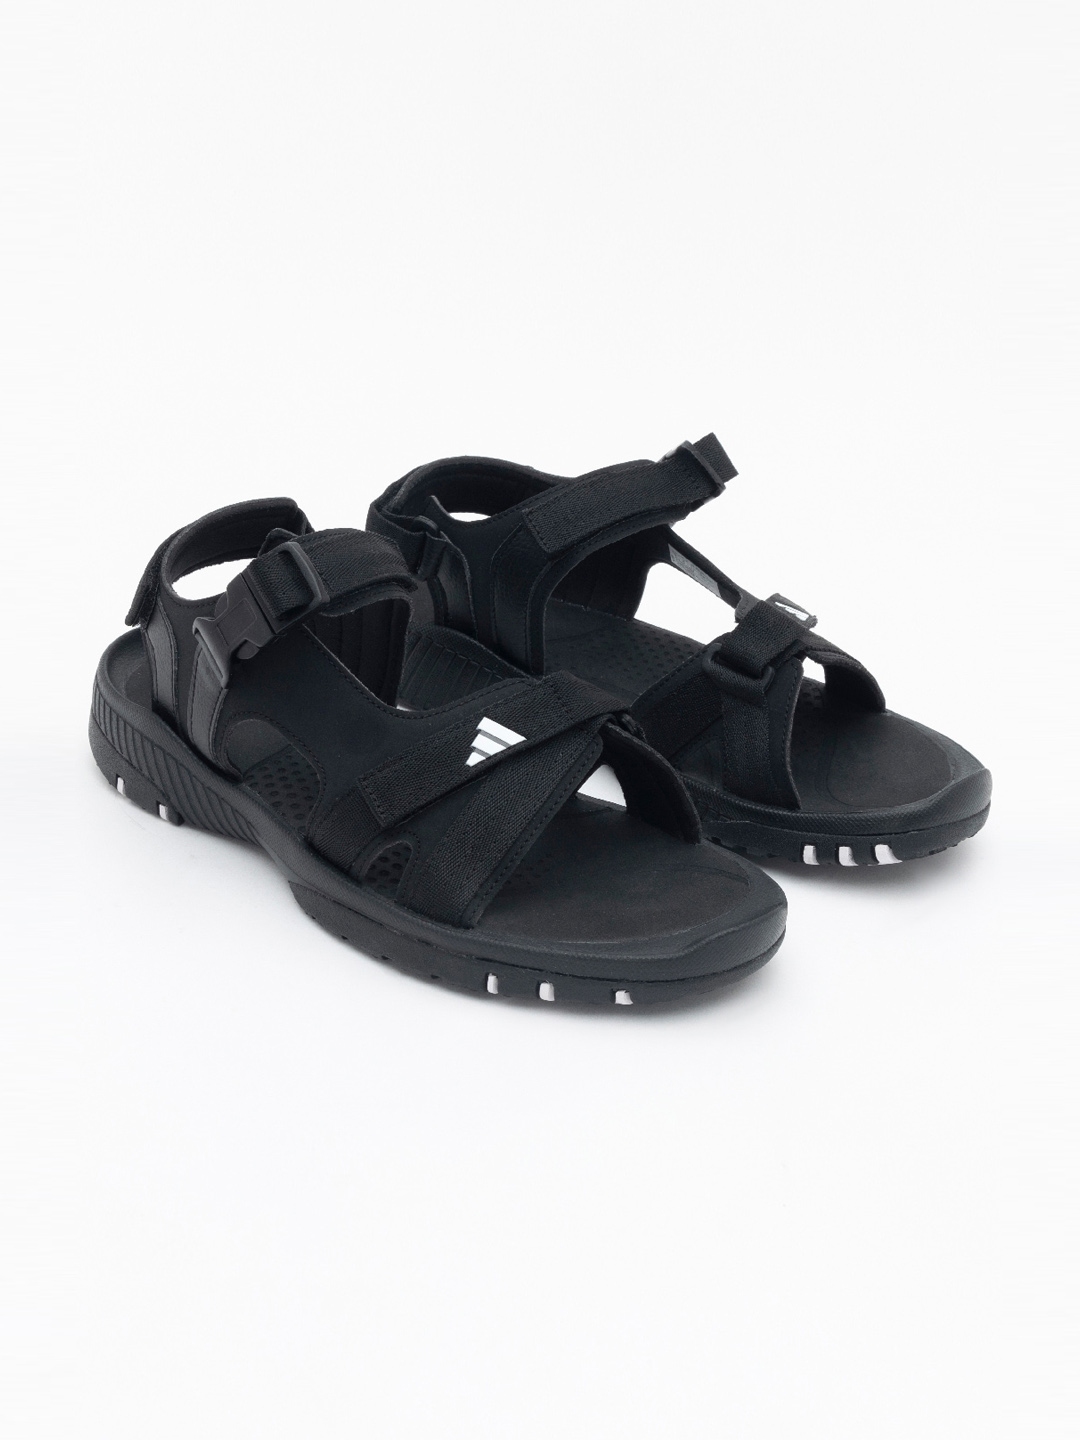 Buy ADIDAS ADISIST M Sports Sandals - Sports Sandals for Men 26280412 ...